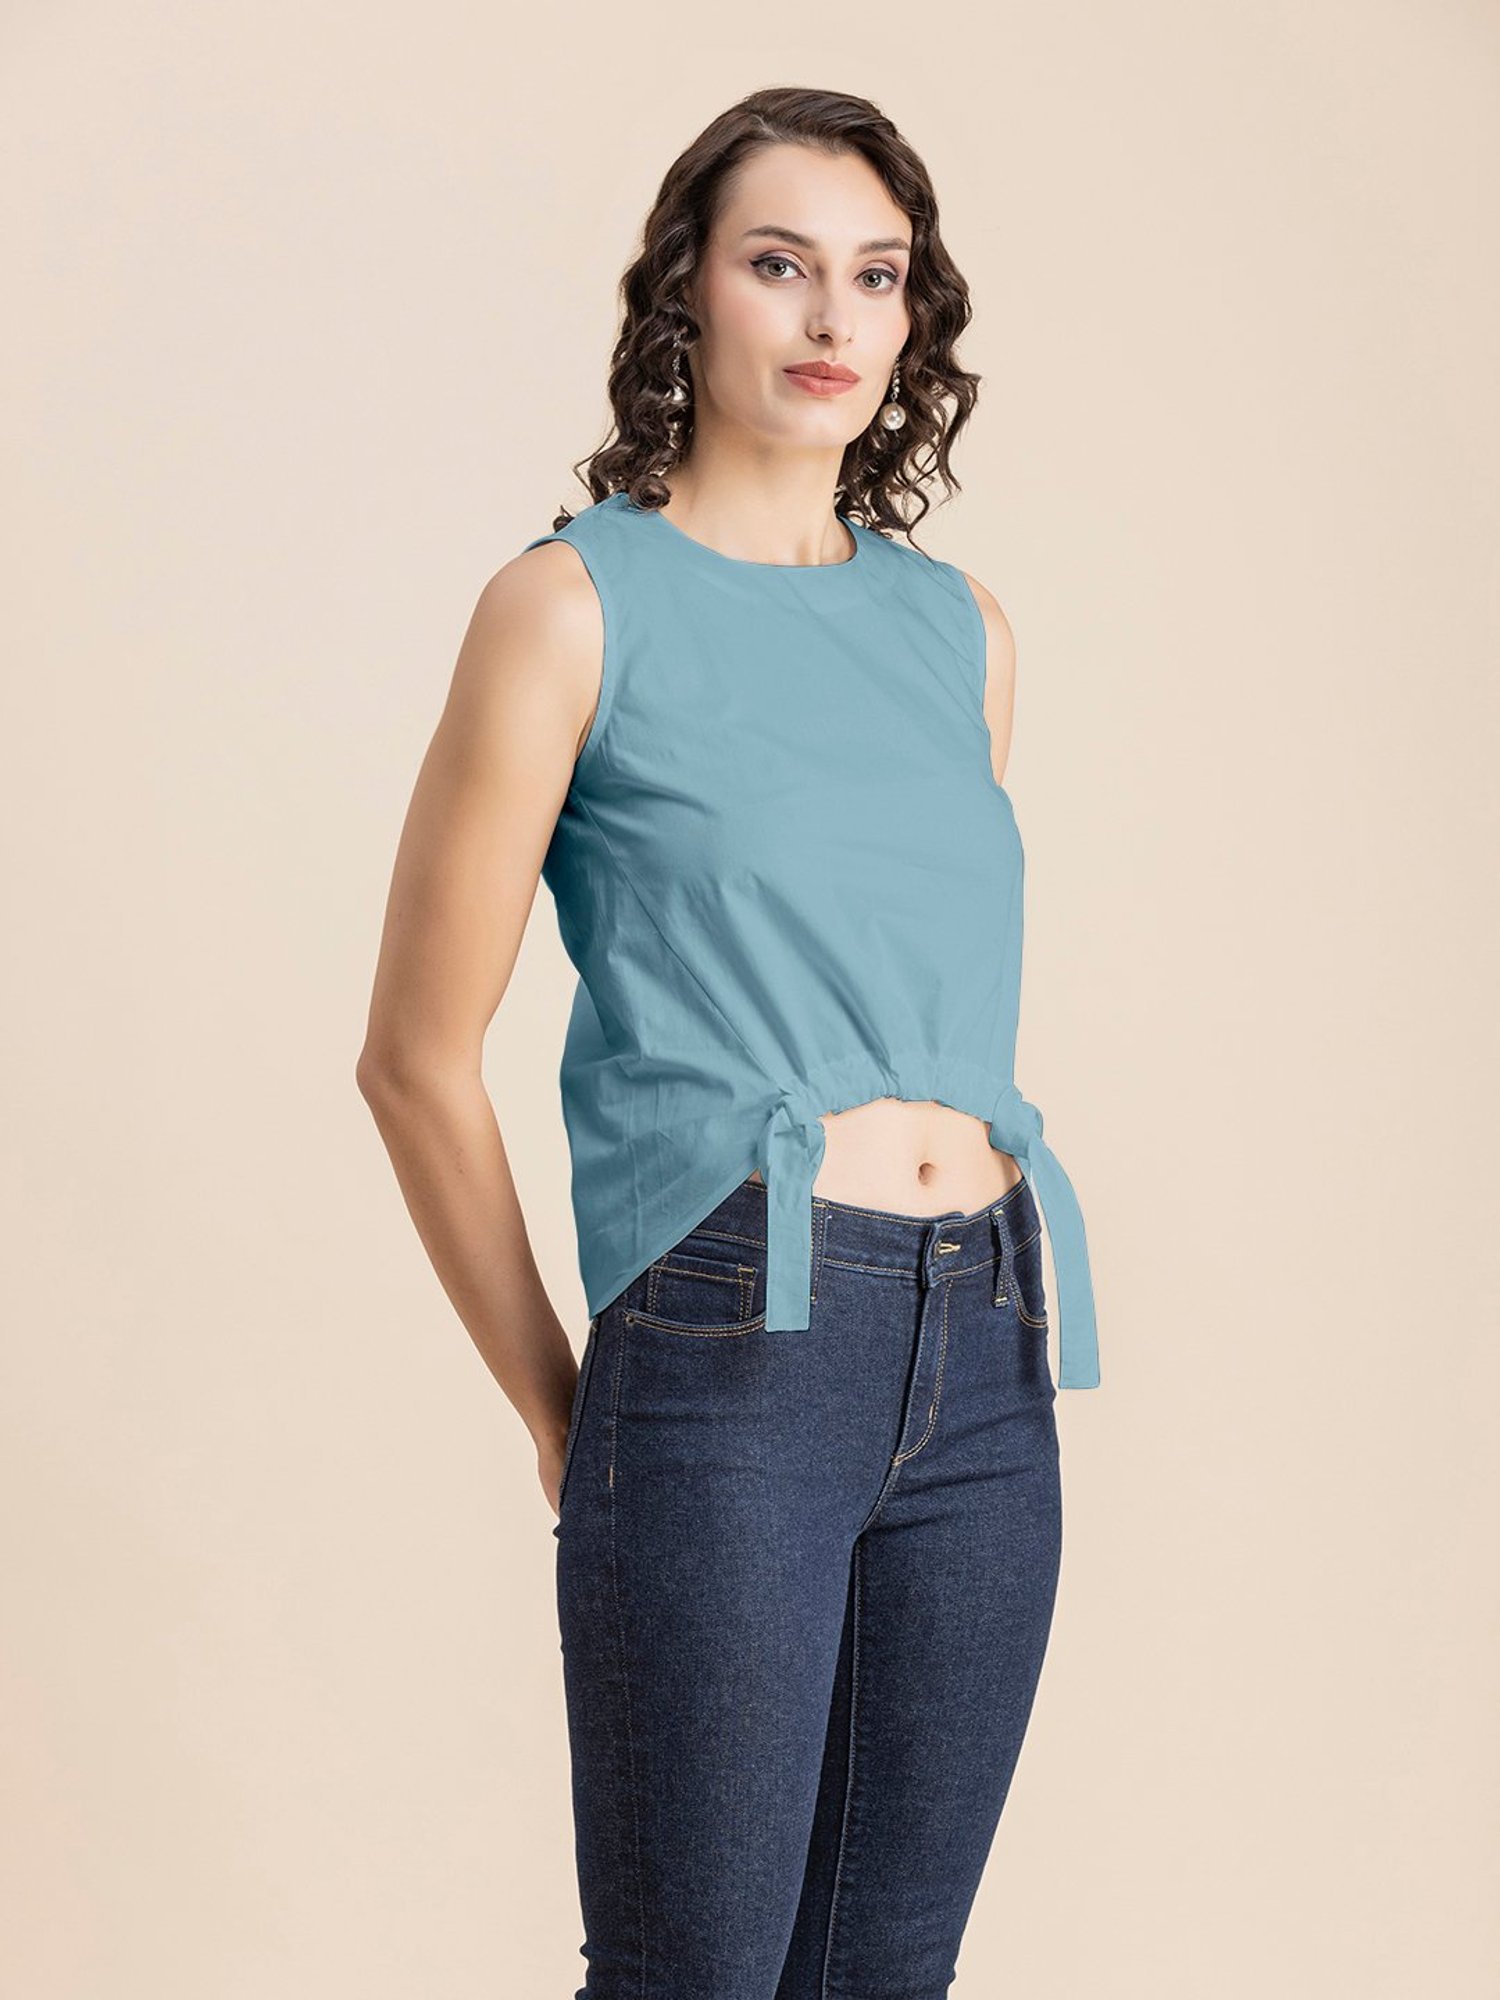 Moomaya Solid Tank Tops For Women, Sleeveless Collar Neck Shirt Crop Top  Blouse